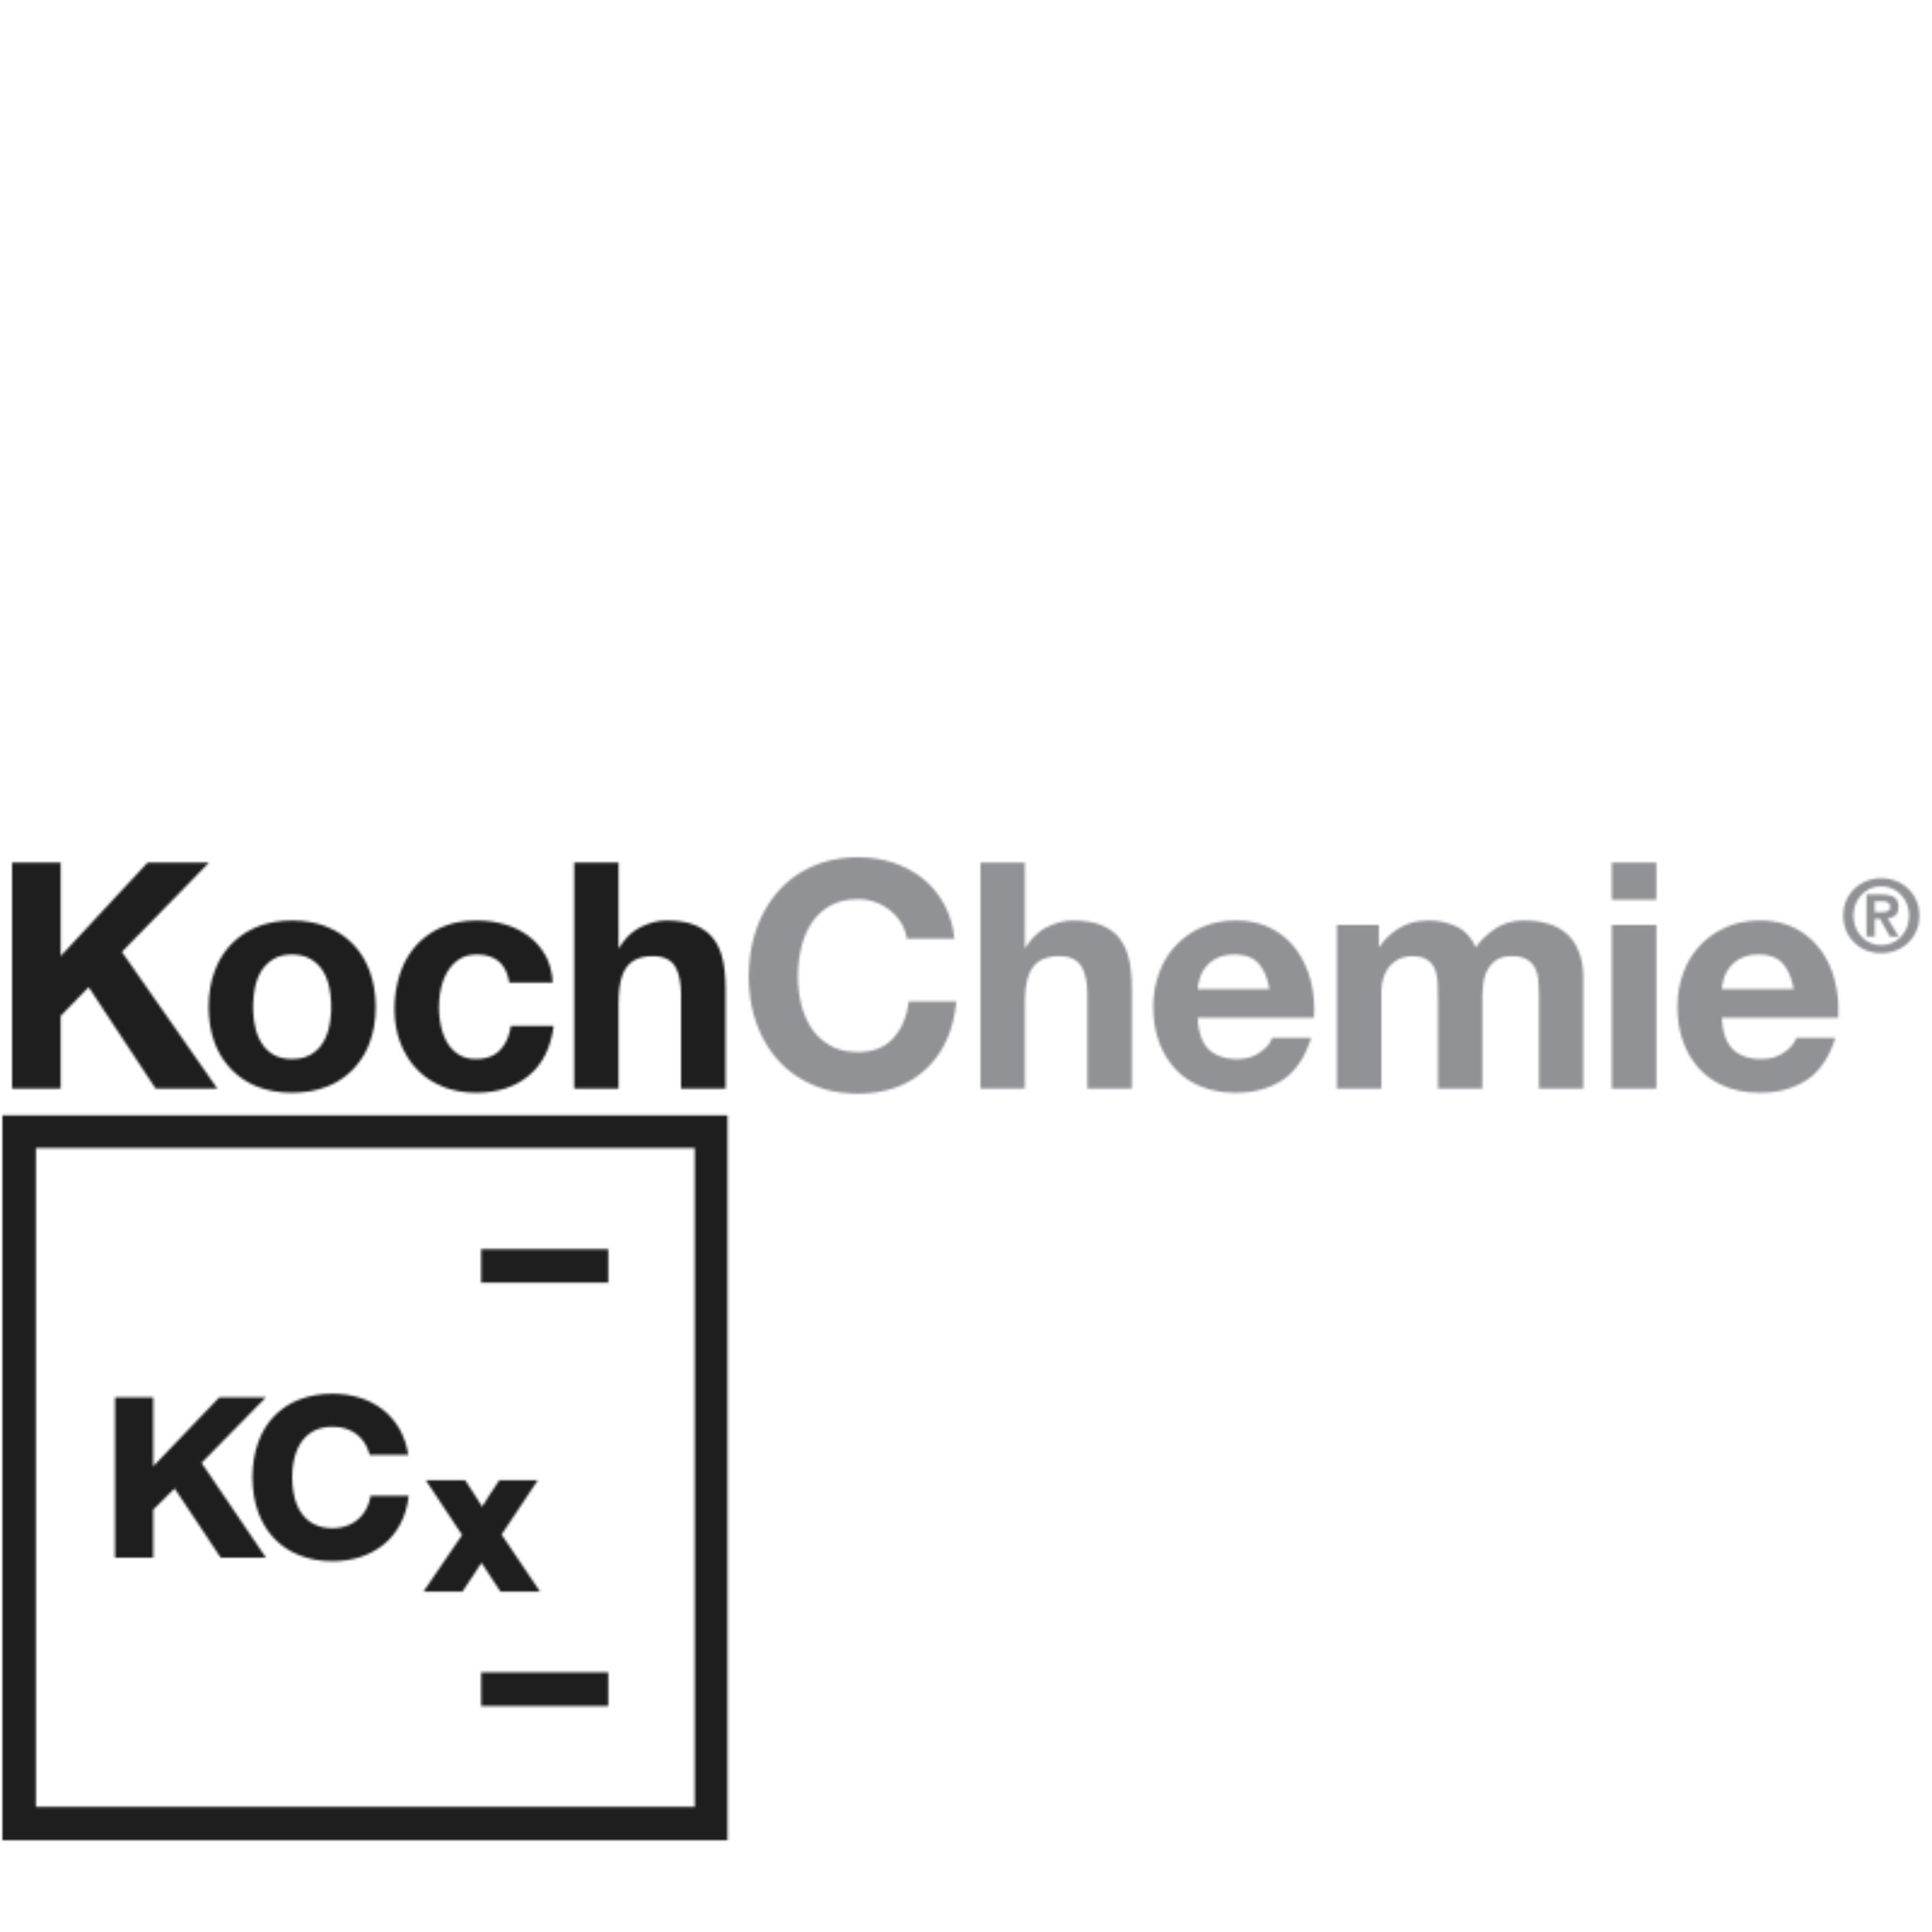 Koch-Chemie – The Detail Culture